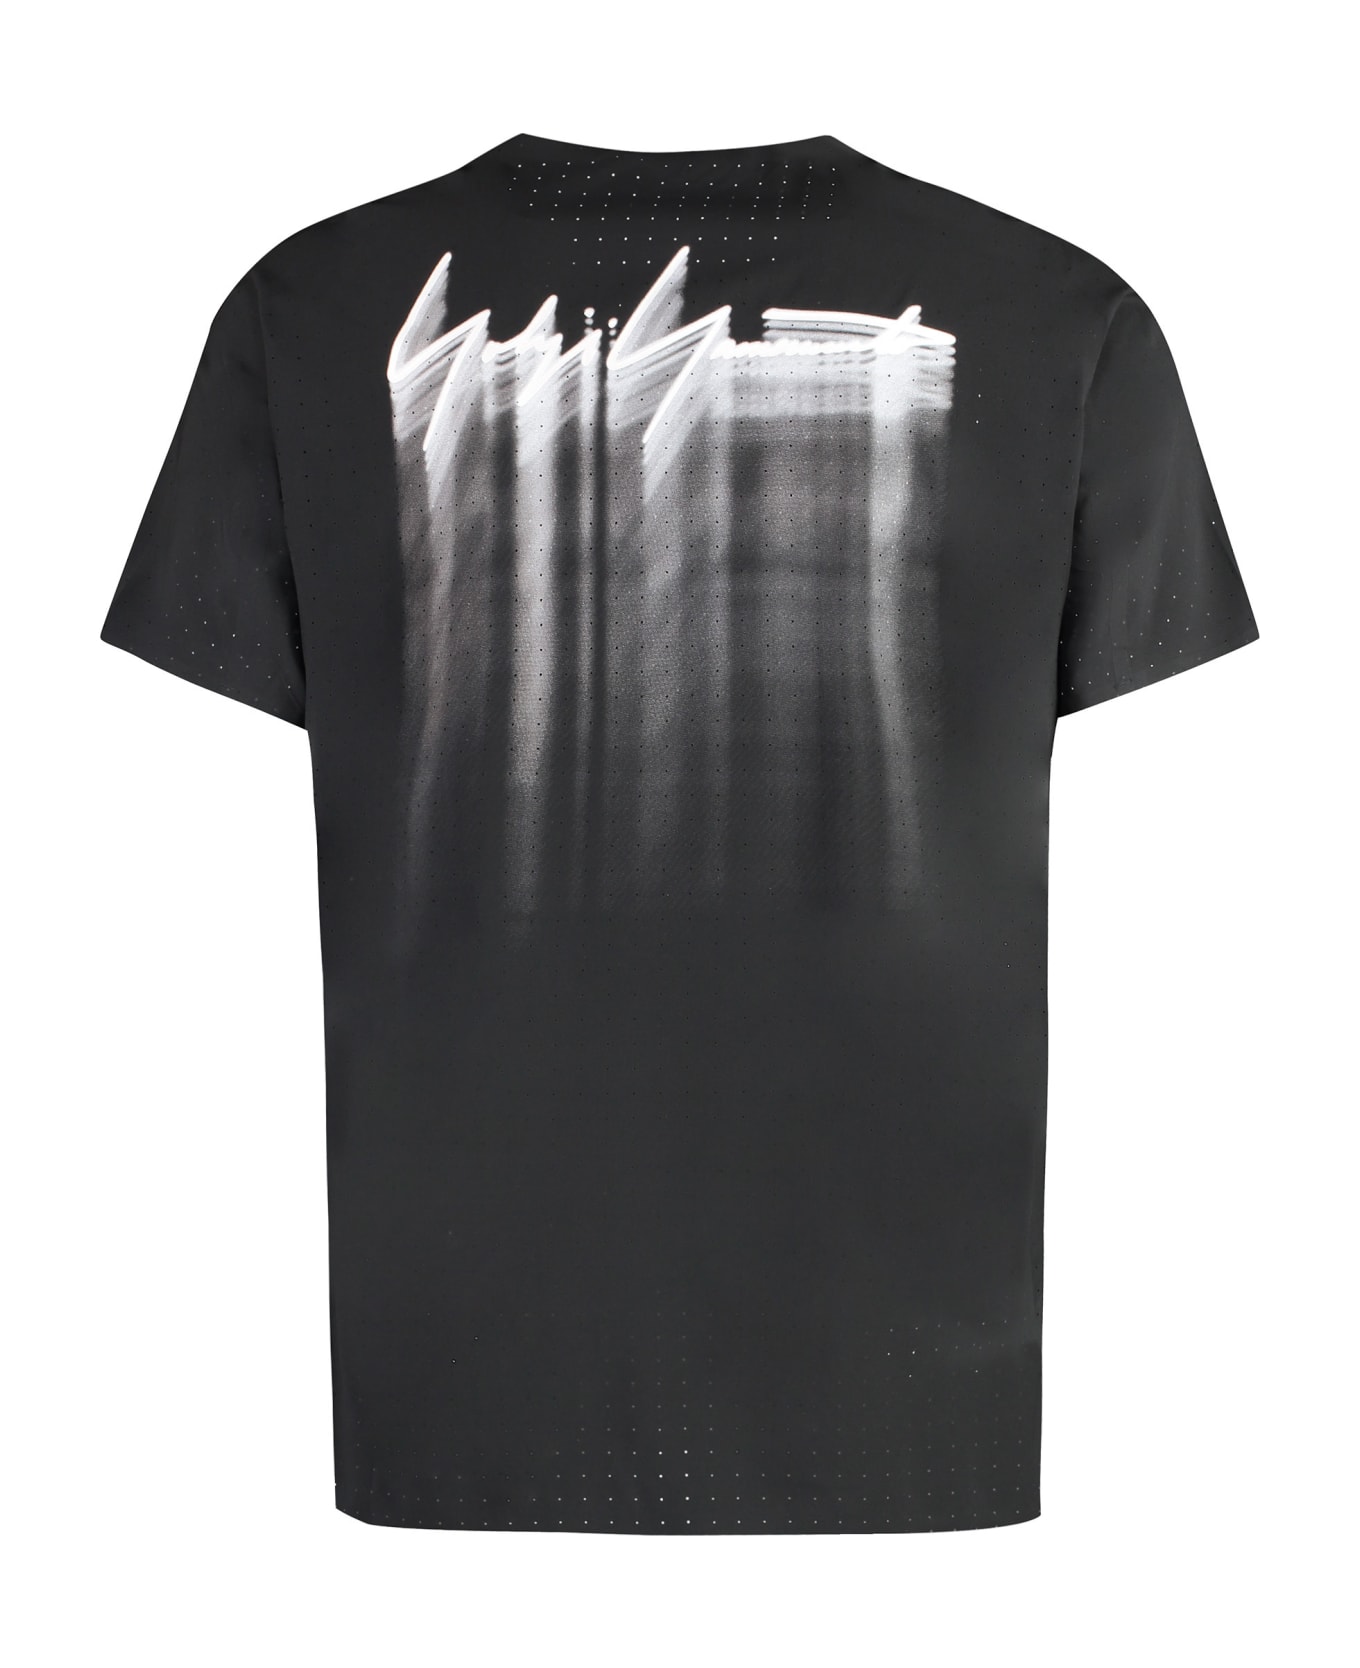 Y-3 Logo Printed Running T-shirt - black